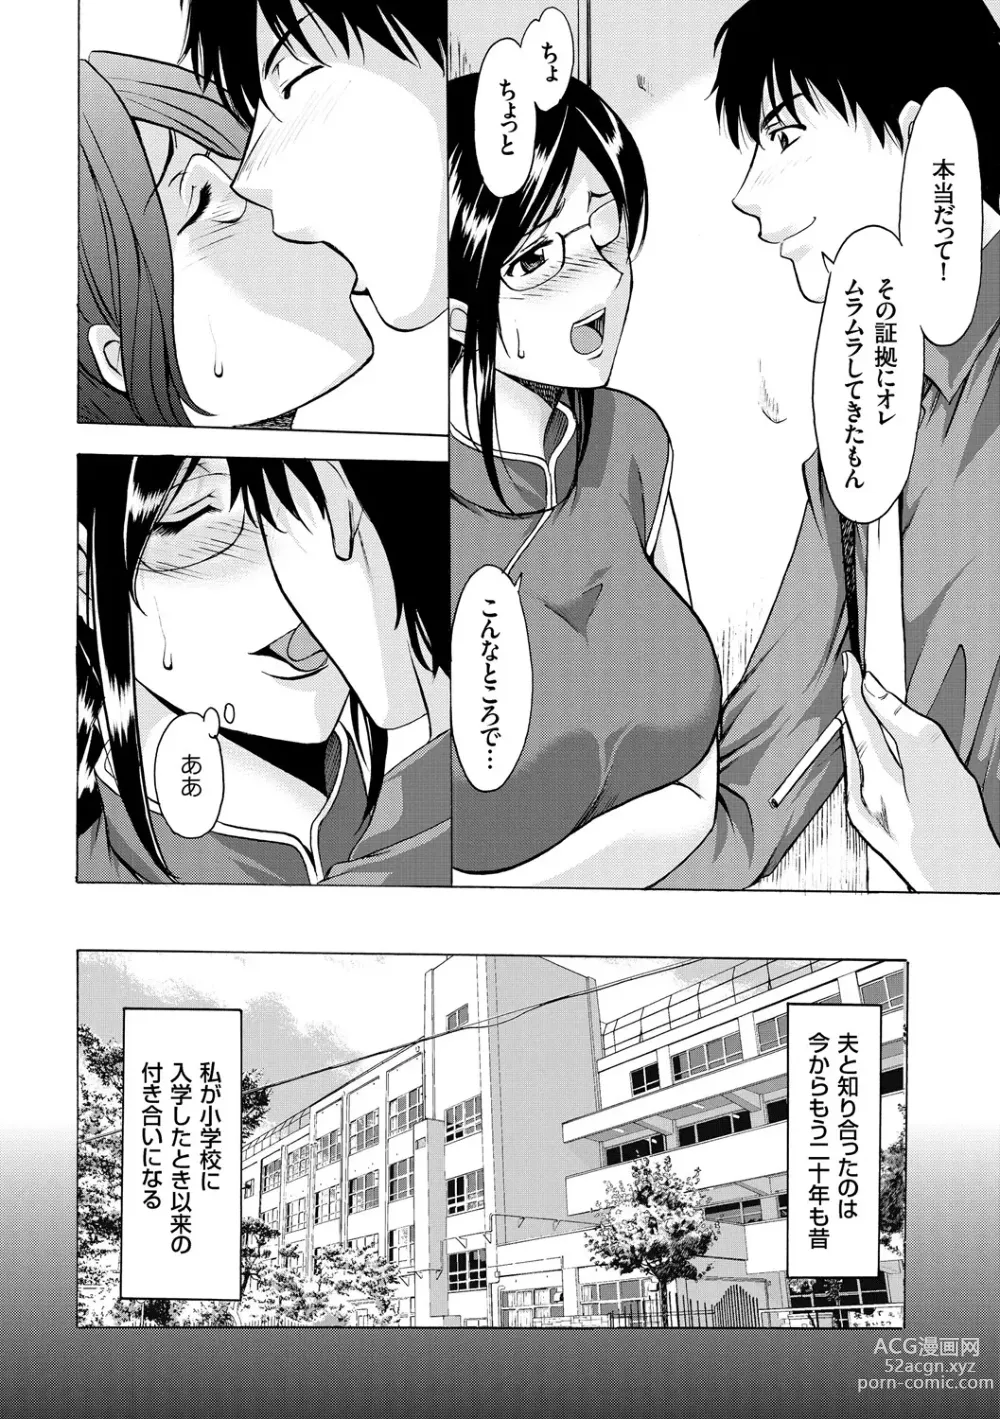 Page 8 of manga Sennyu Tsuma Satomi Kiroku